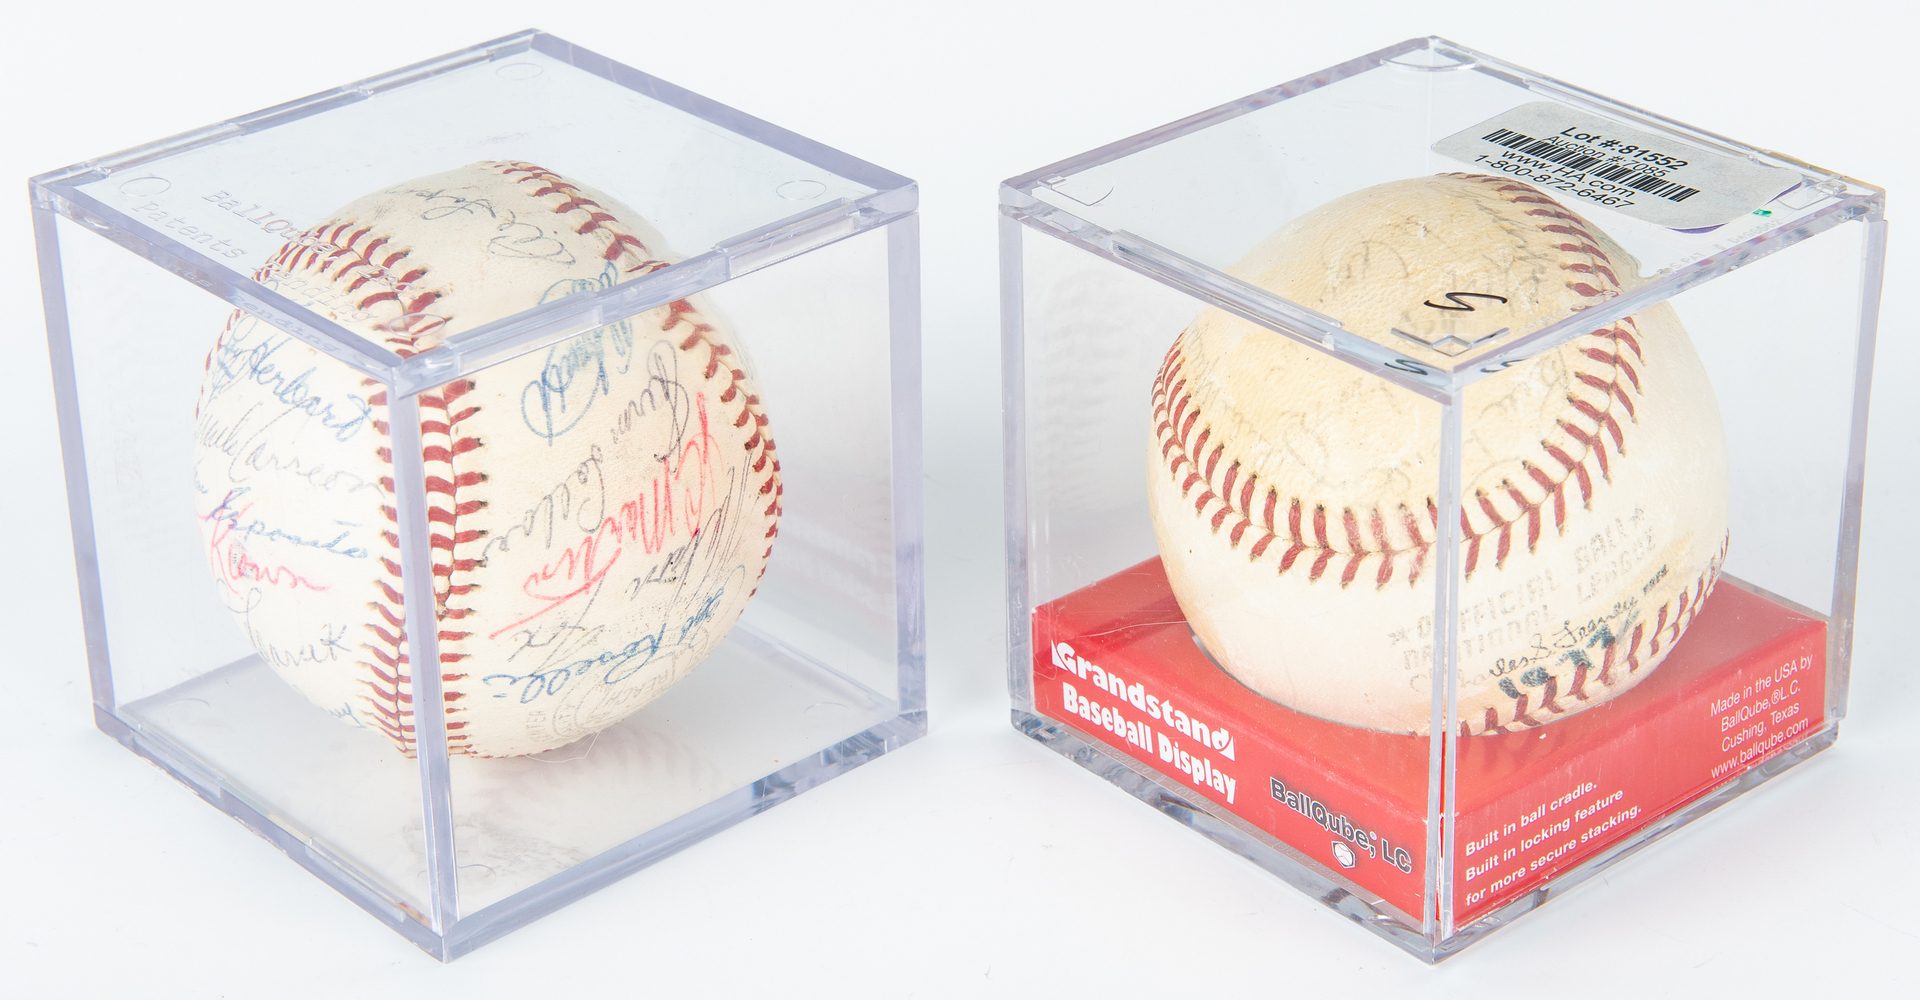 Lot 420: 2 Autographed Baseballs, inc. 1961 White Sox